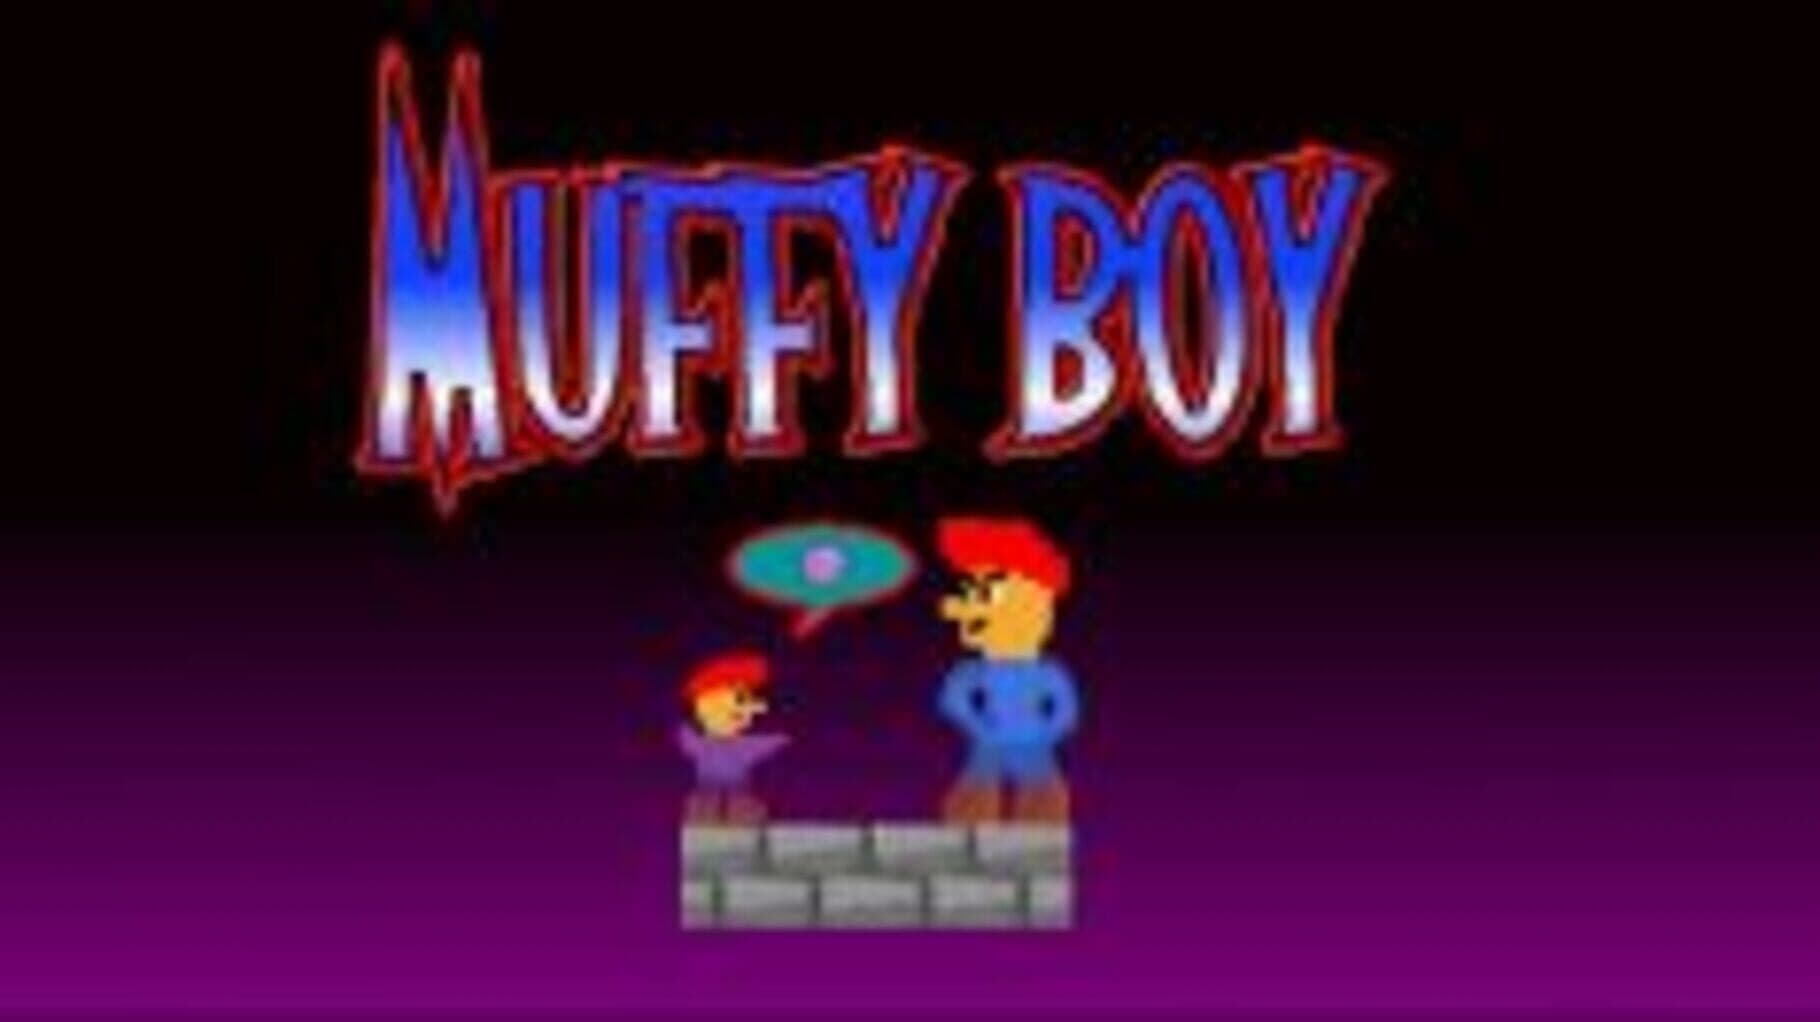 Muffy Boy cover art